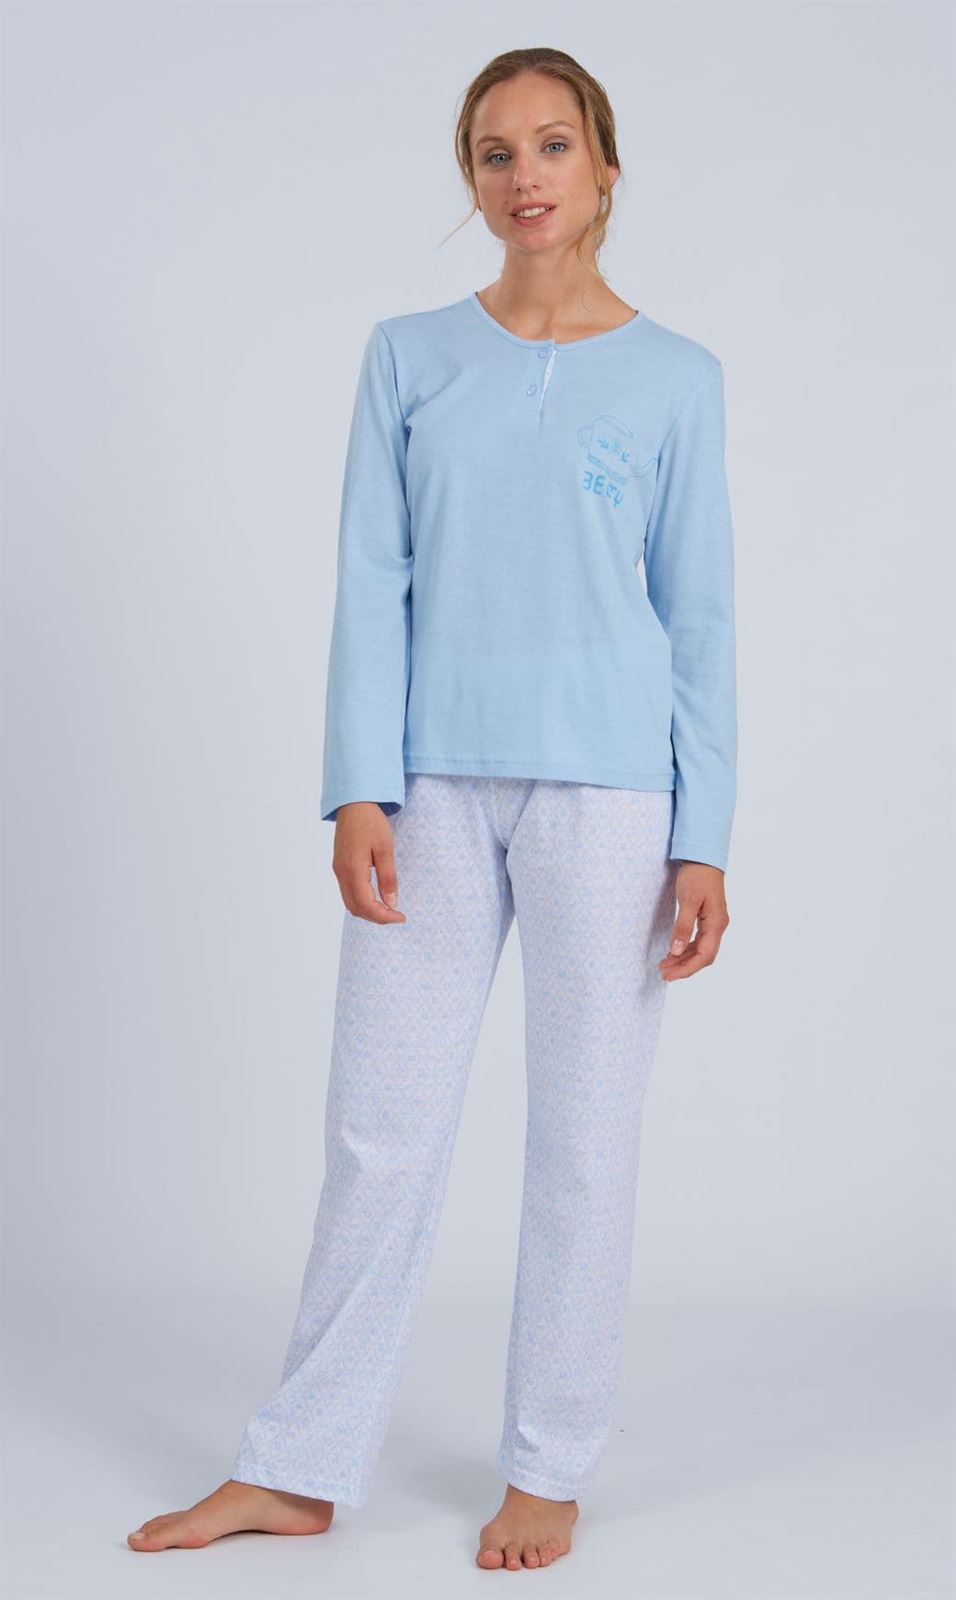 Pijama azul - Imagen 1